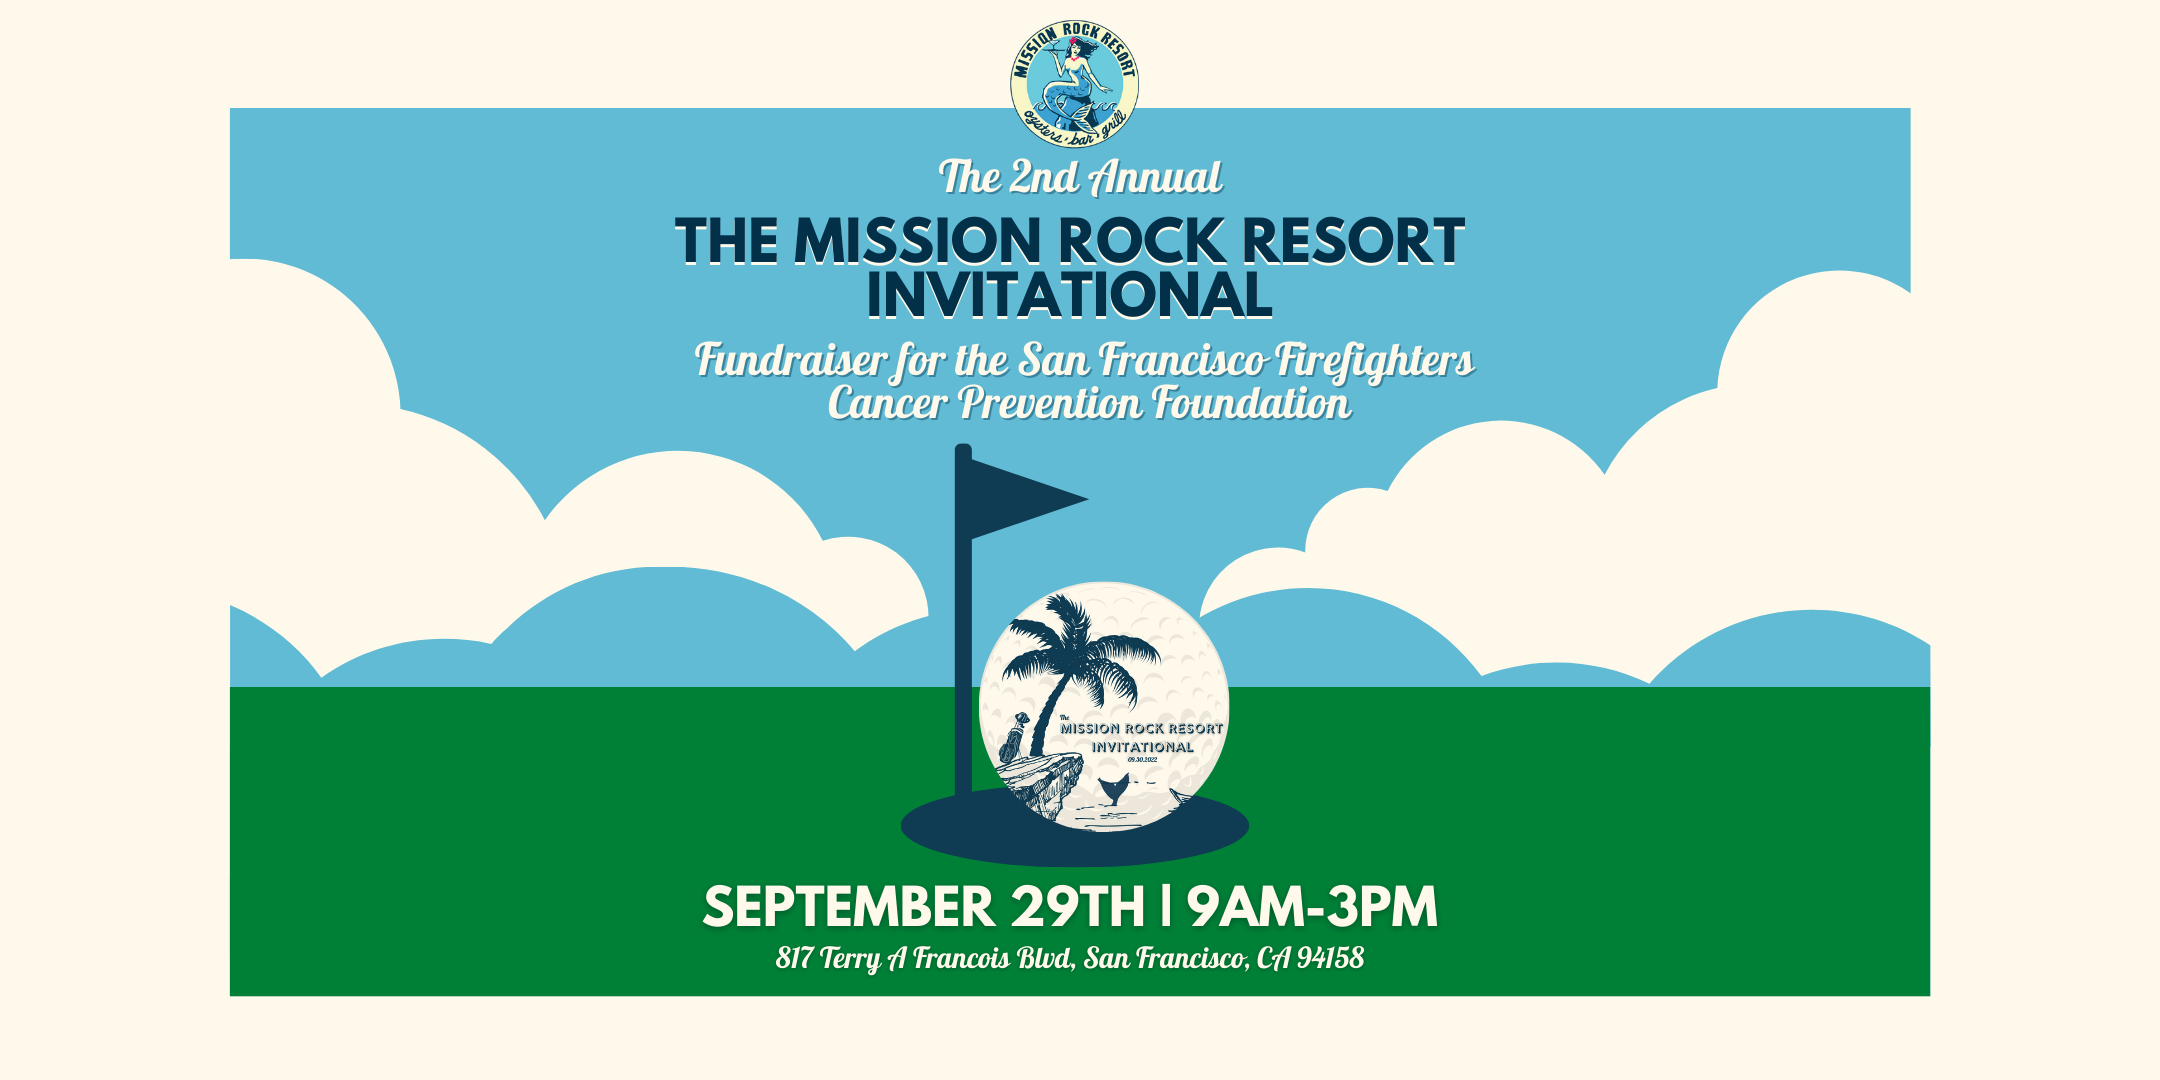 The 2nd Annnual Mission Rock Resort Invitational